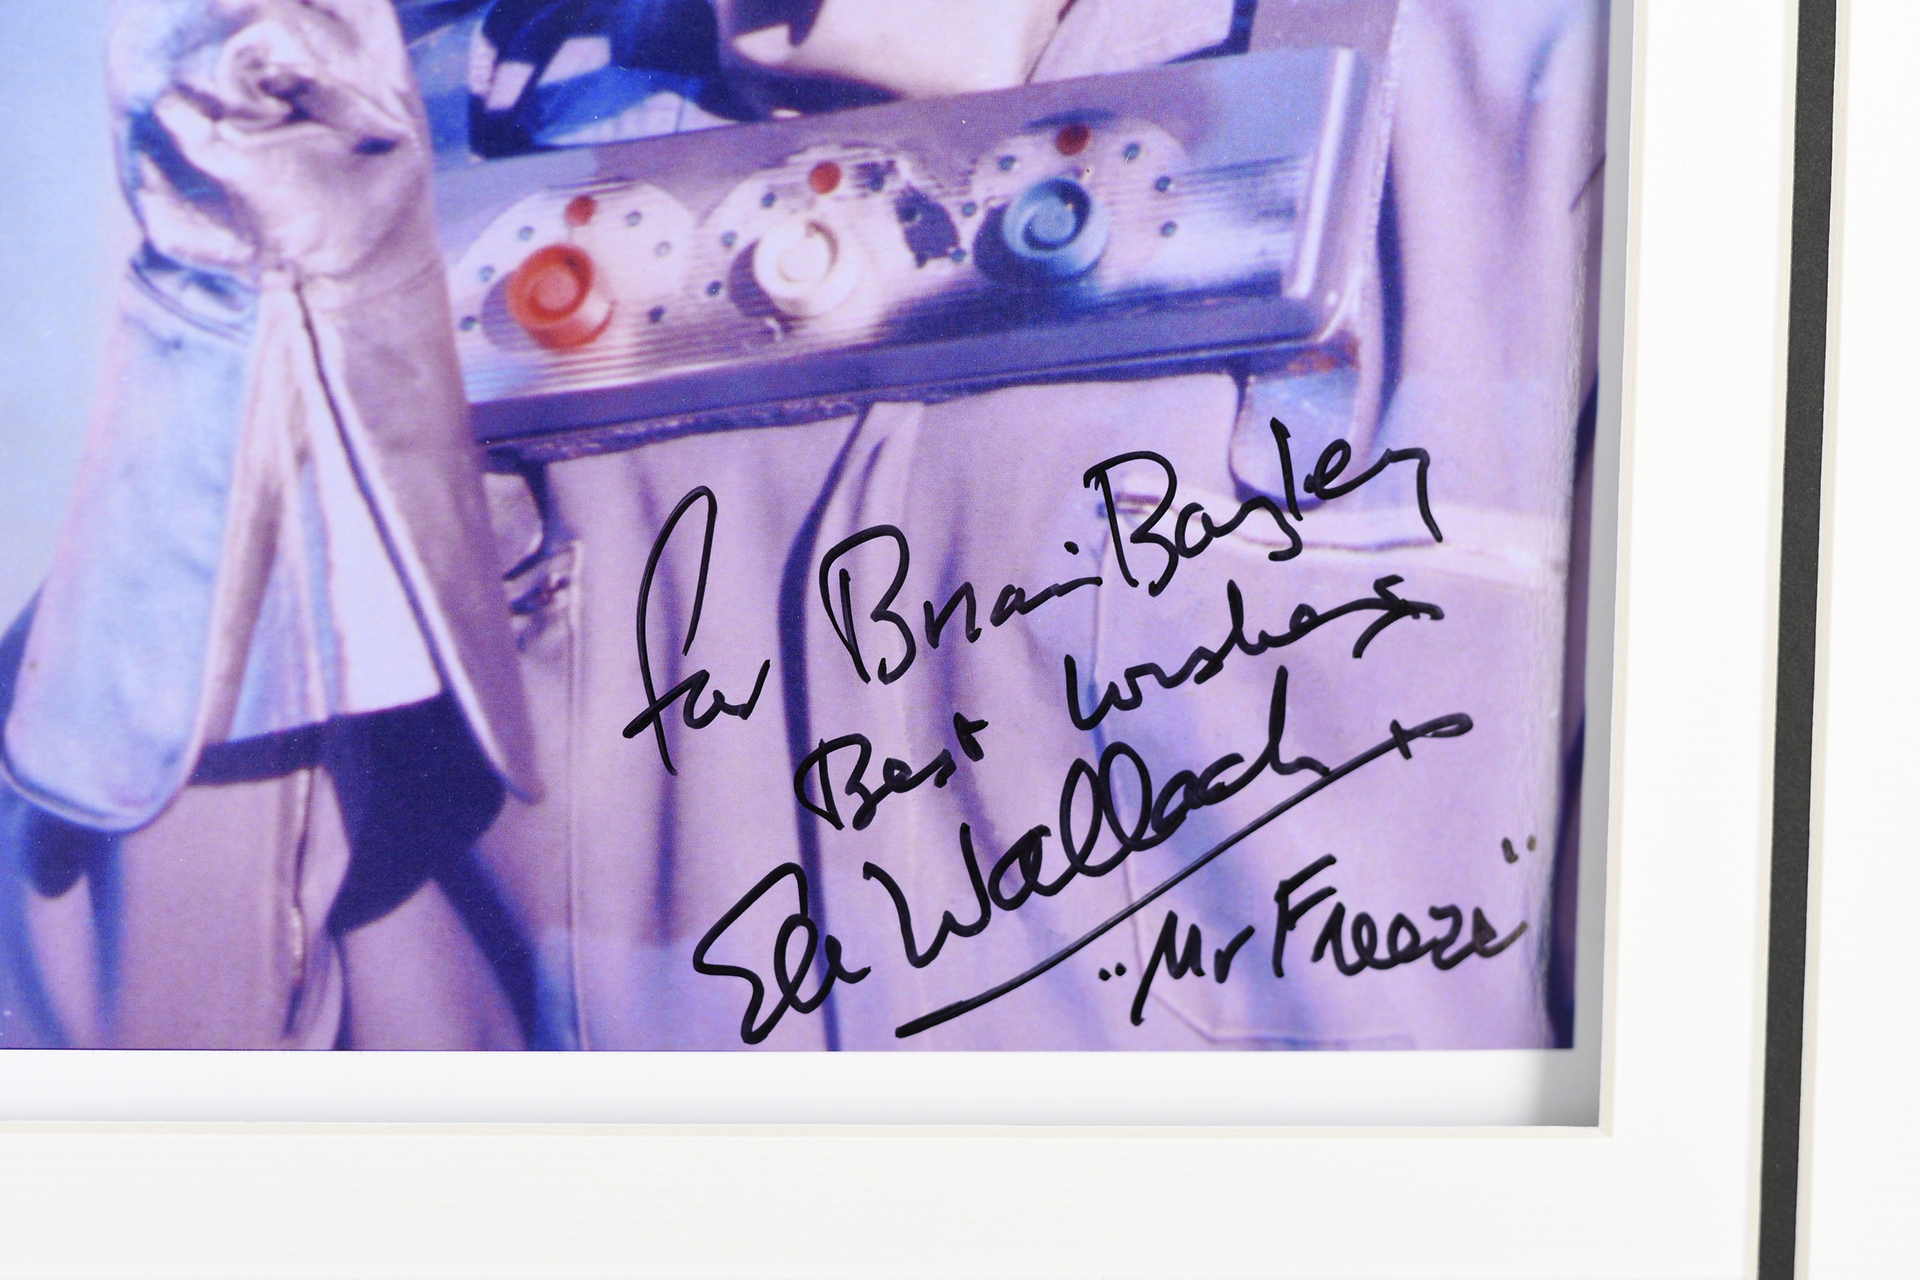 Burgess Meredith ""The Penguin"" Eli Wallach ""Mr Freeze"" Signed Photo Presentation - Image 4 of 8